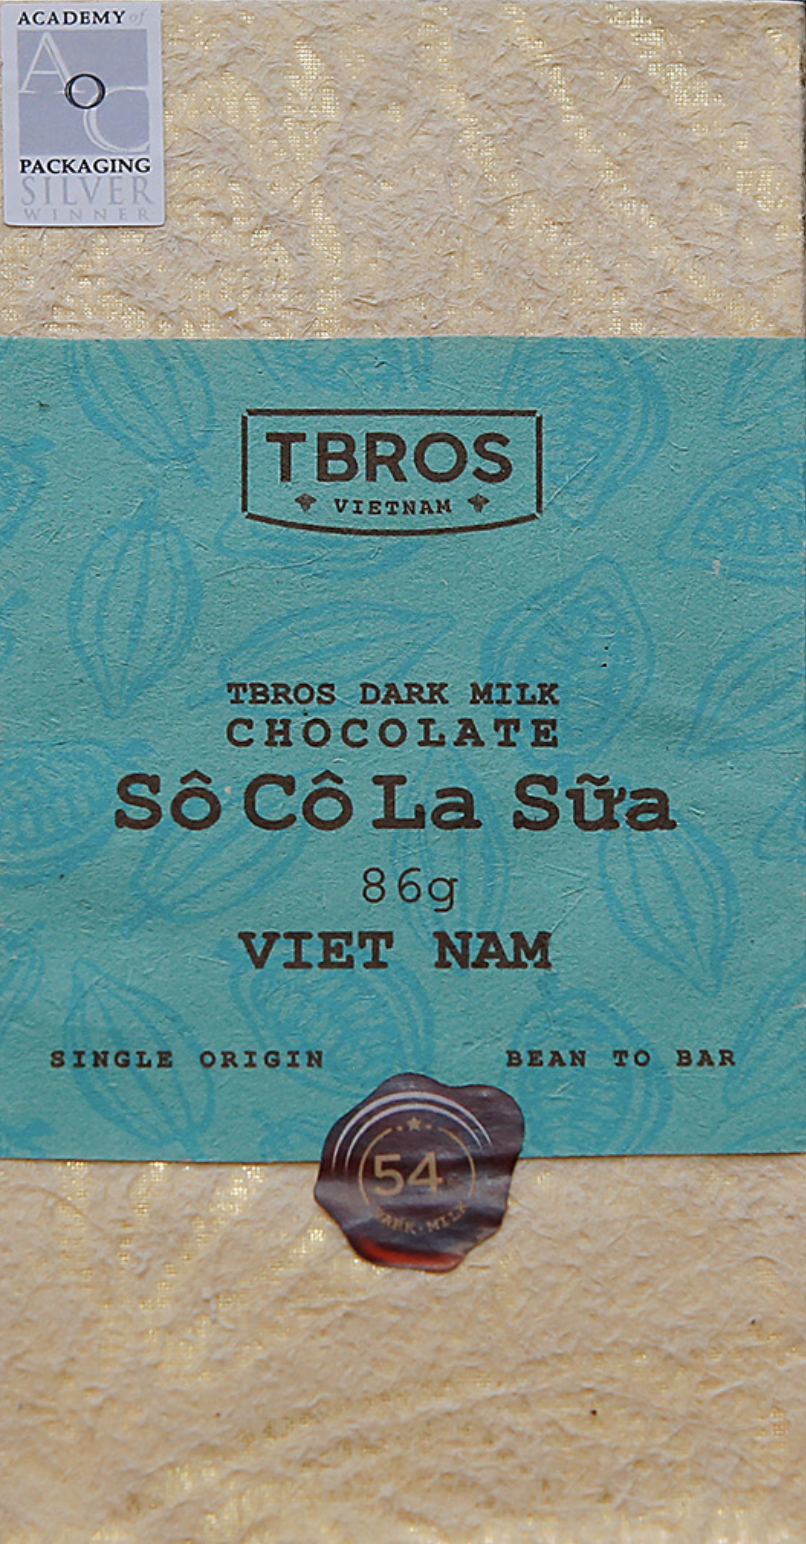 TBROS Chocolate | Milchschokolade »Vietnam - Sô Cô La Sua« 54% | 86g